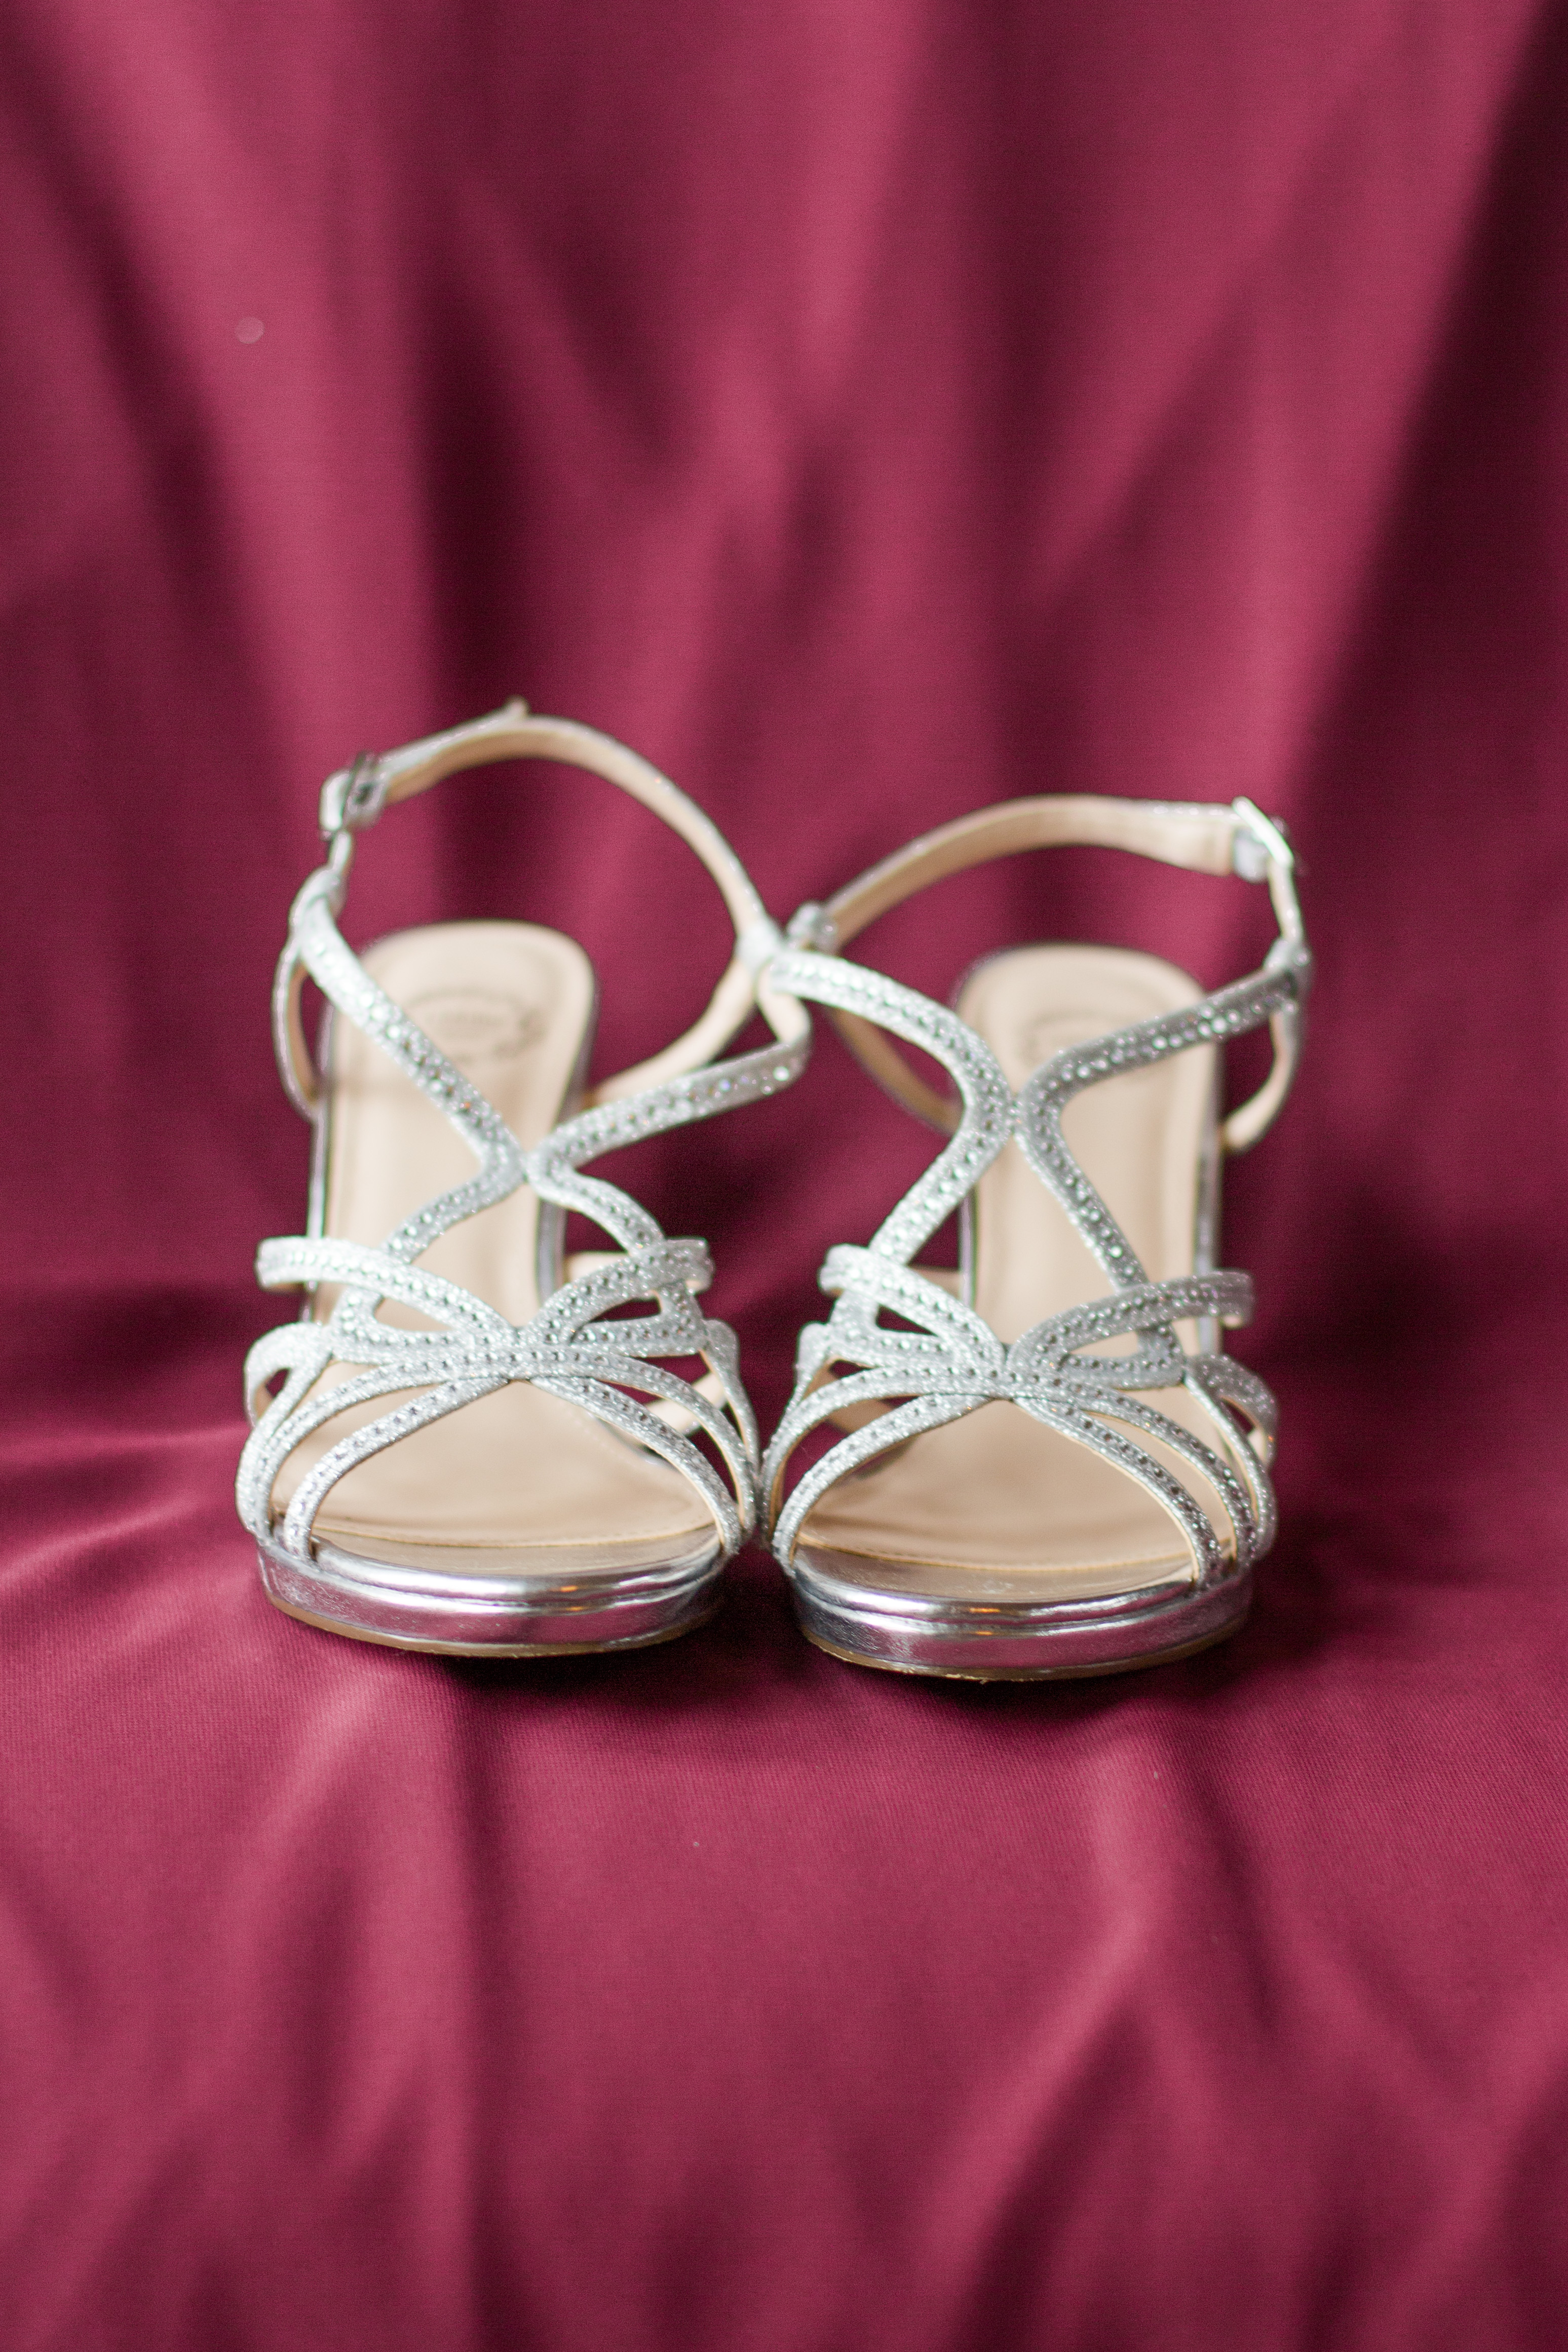 Silver Strappy Heels Wedding Shoes - Karen Elise Photography